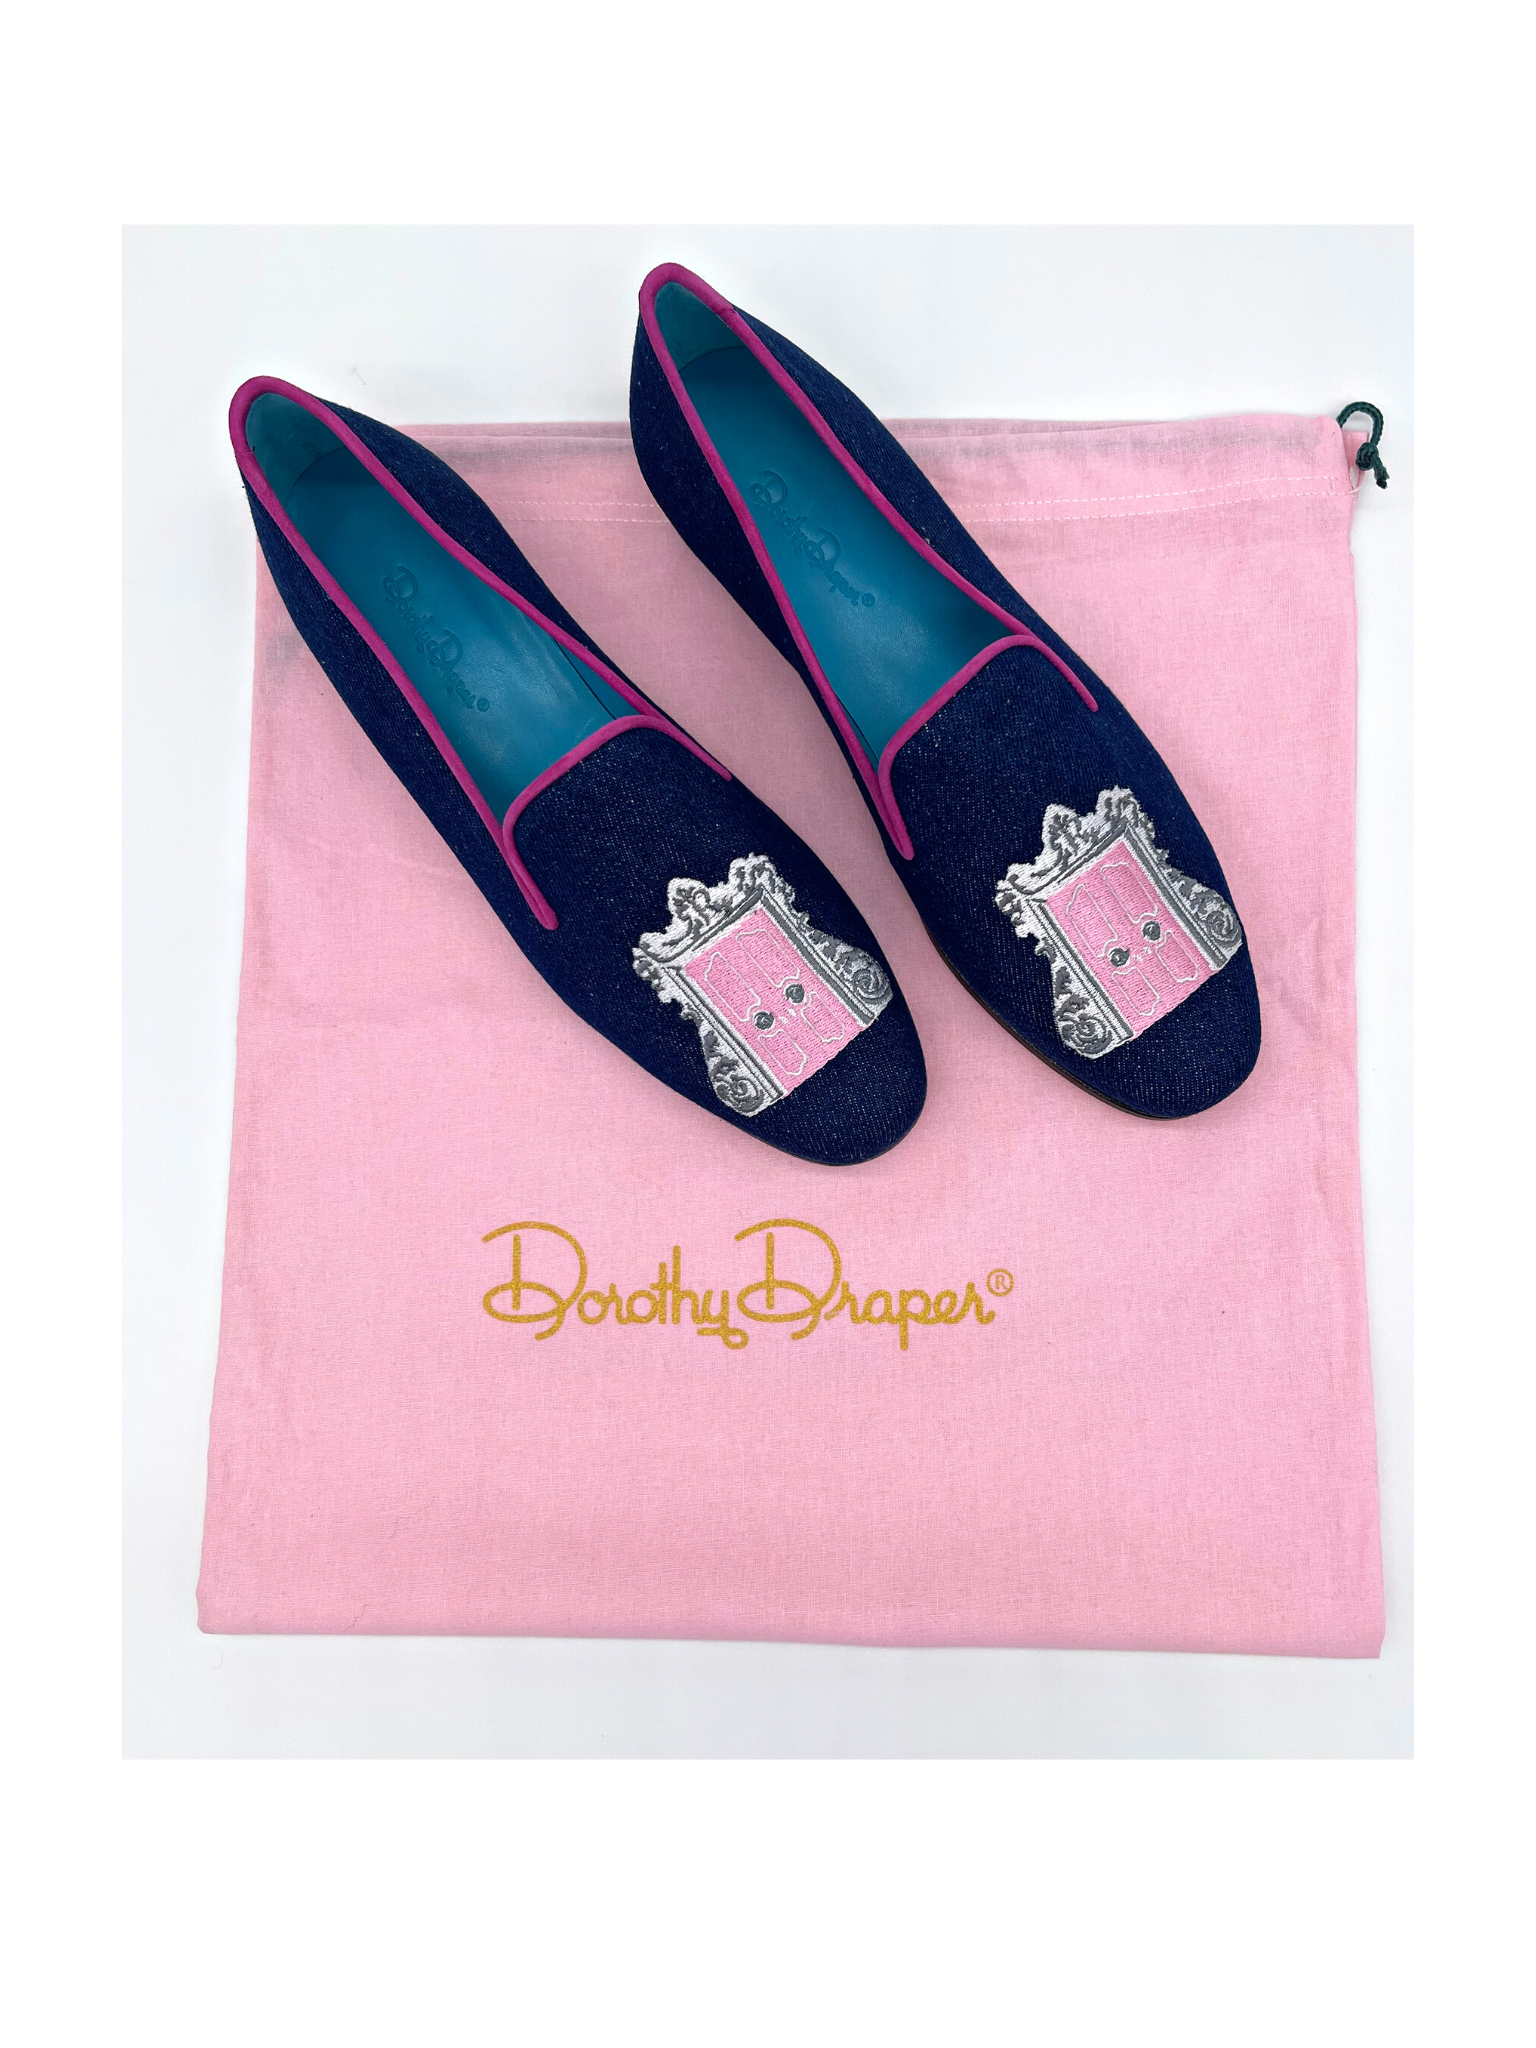 Dorothy Draper Pink Door Shoe on jean with pink side trim